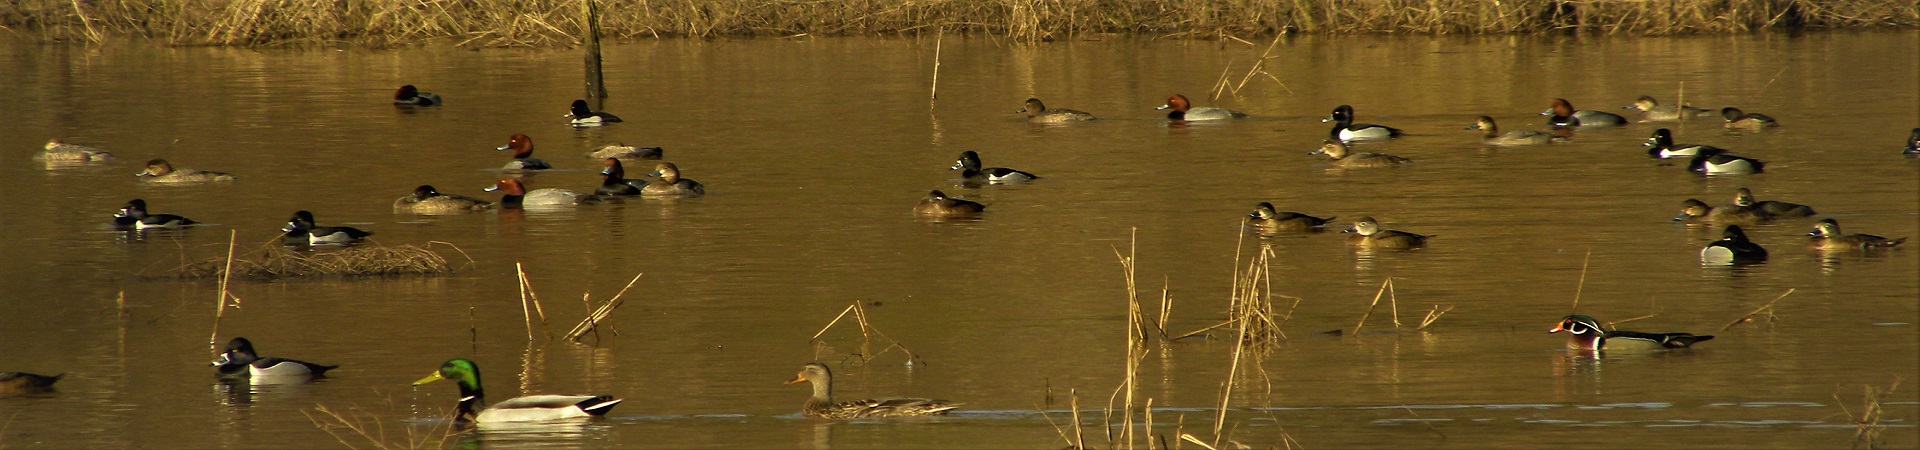 Ducks on the Water